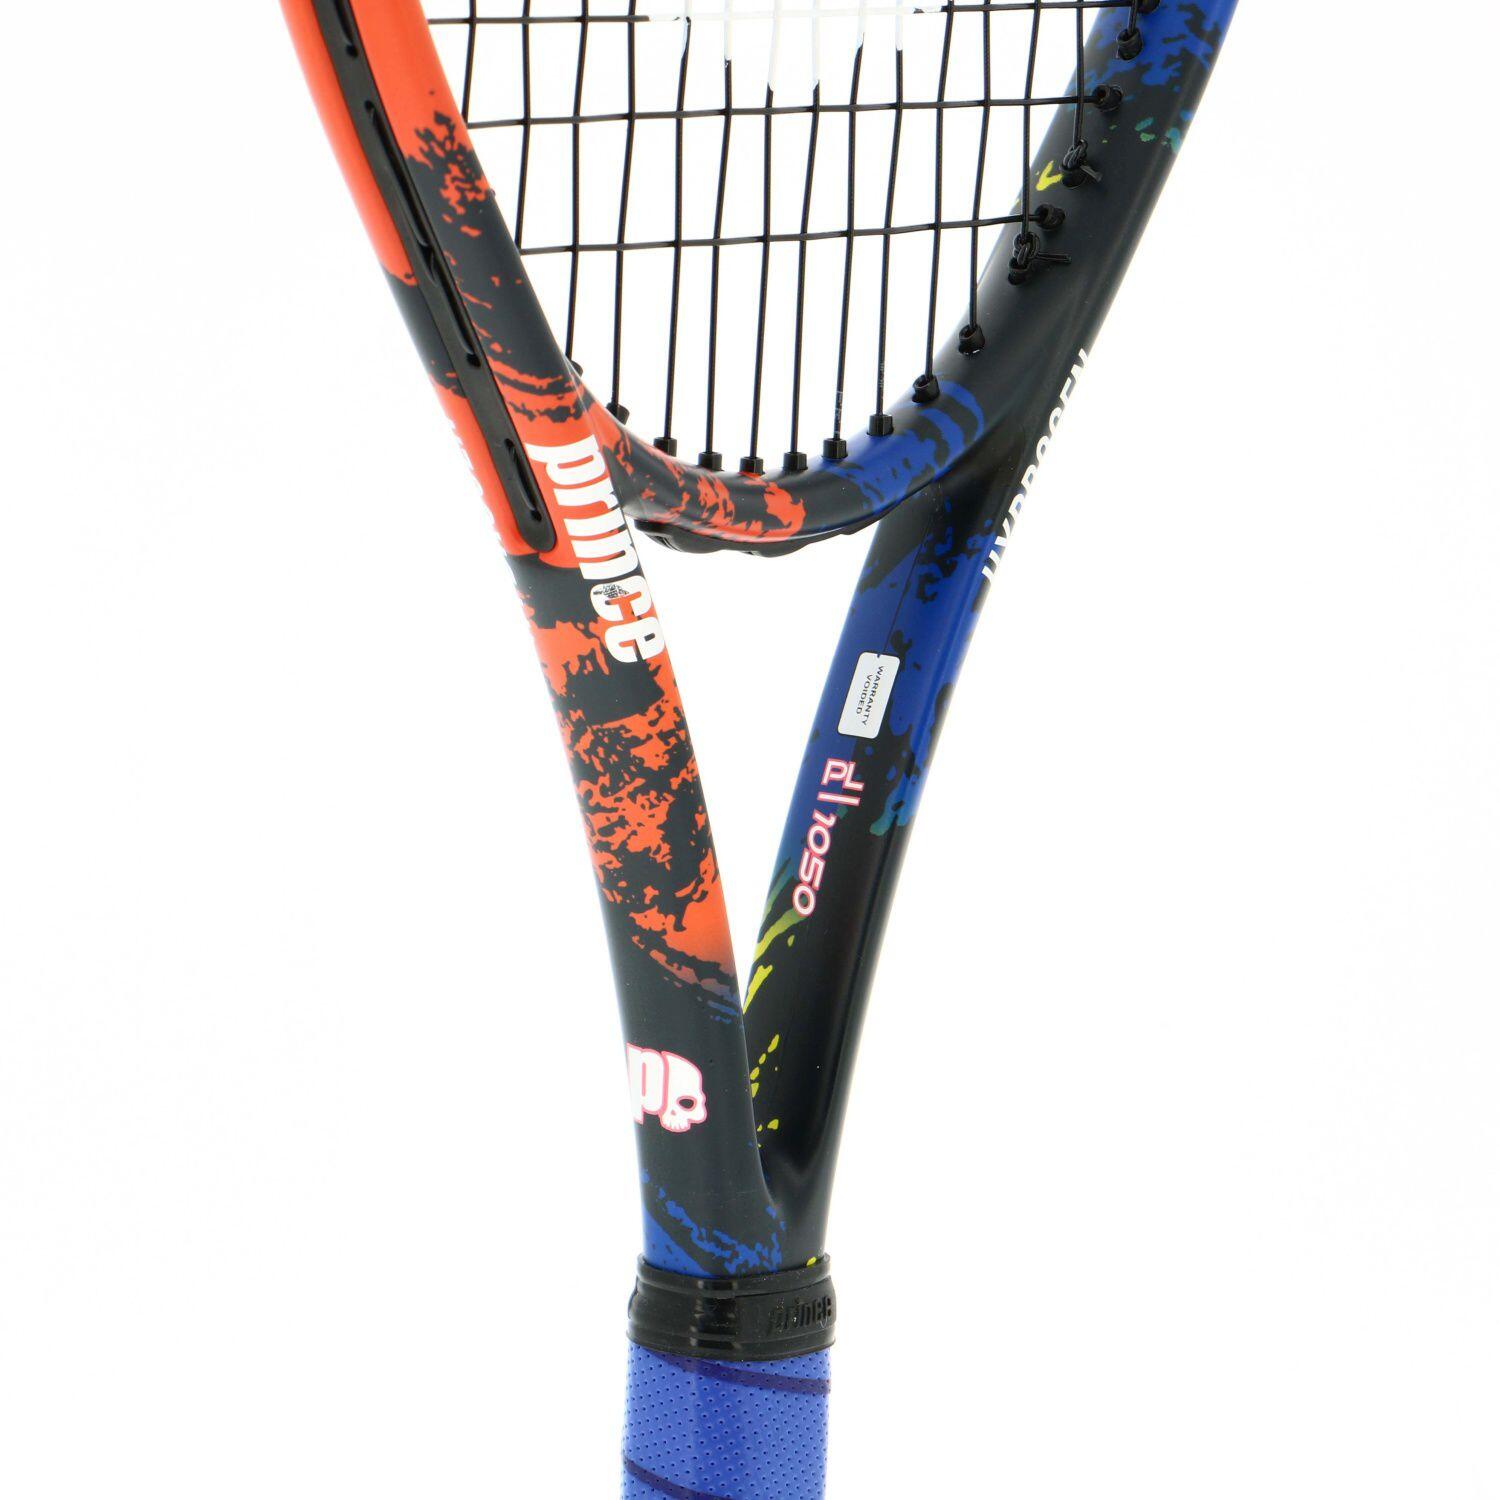 Prince Hydrogen Random 265g Tennis Racket - Limited Edition 3/6